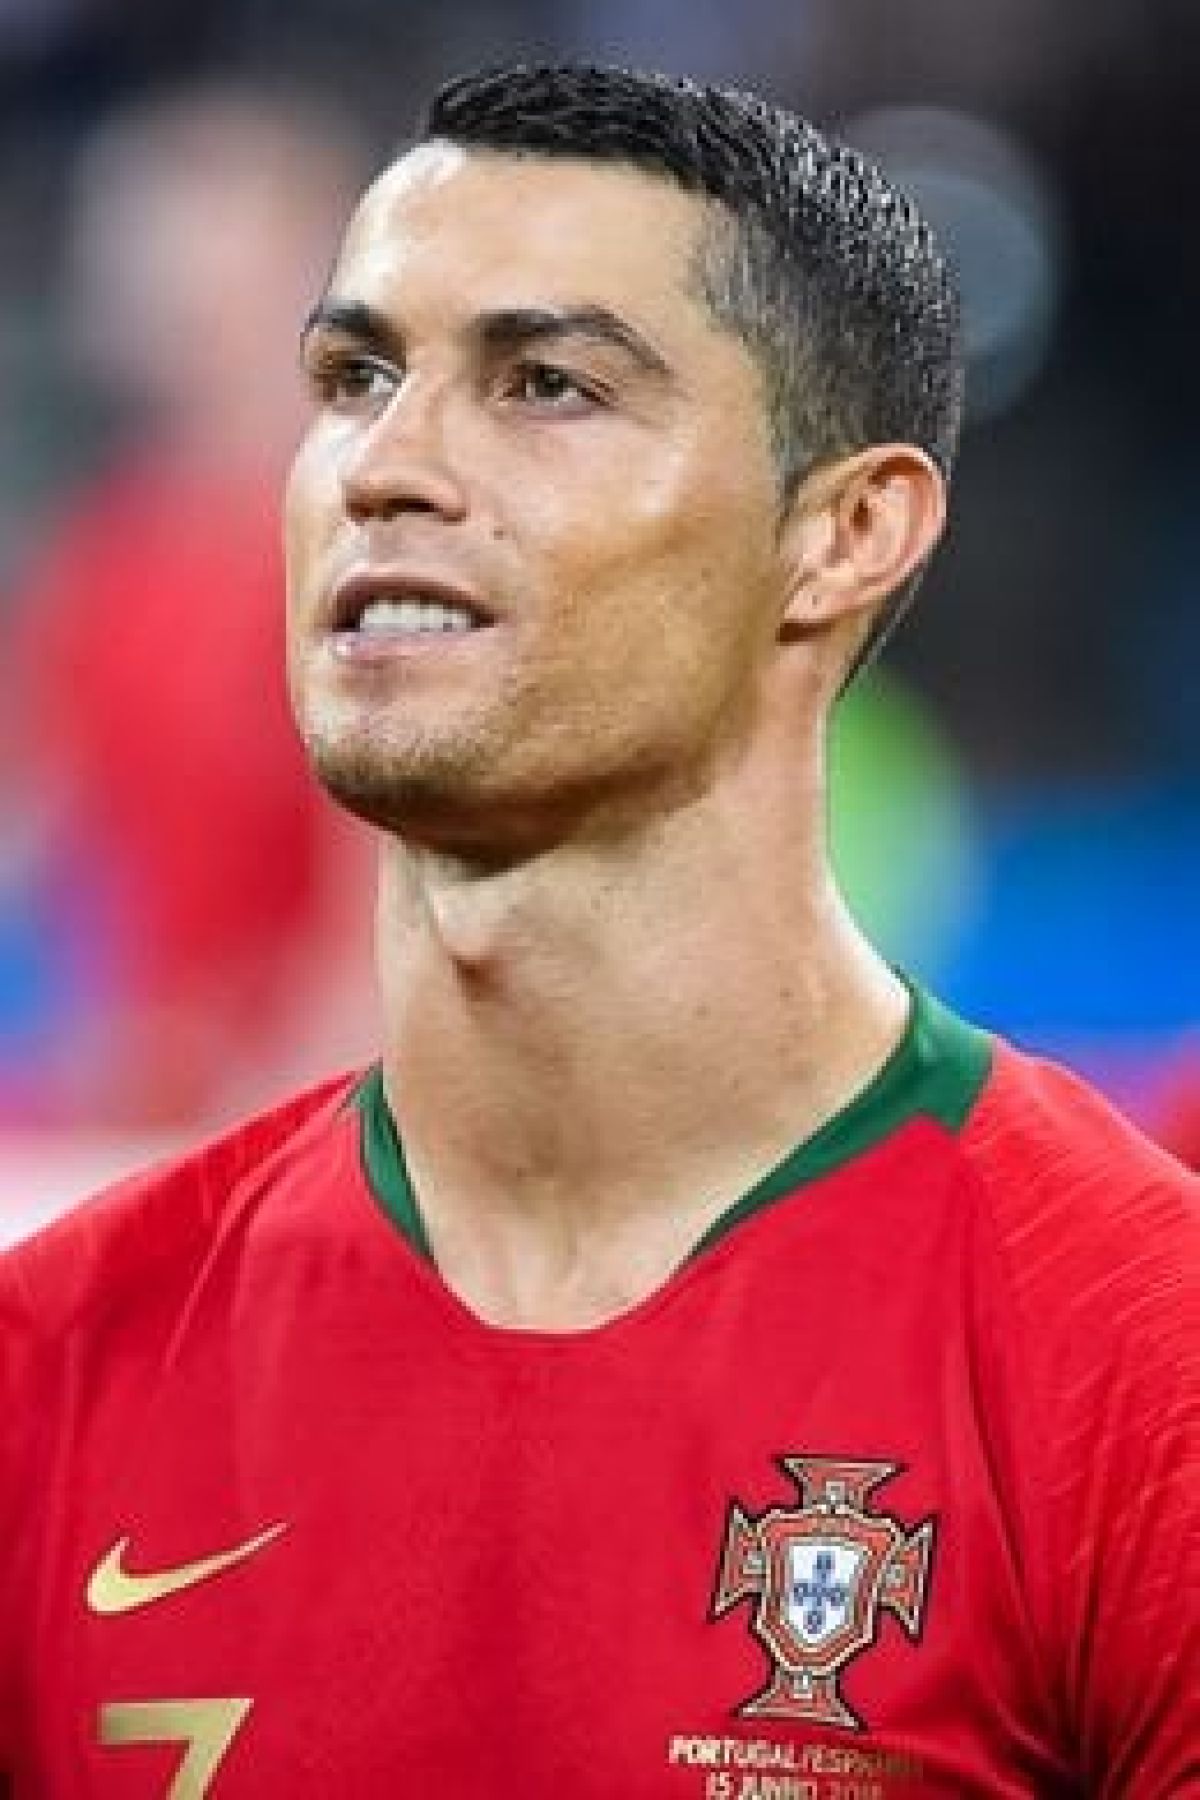 Cristiano Ronaldo guilty of tax evasion